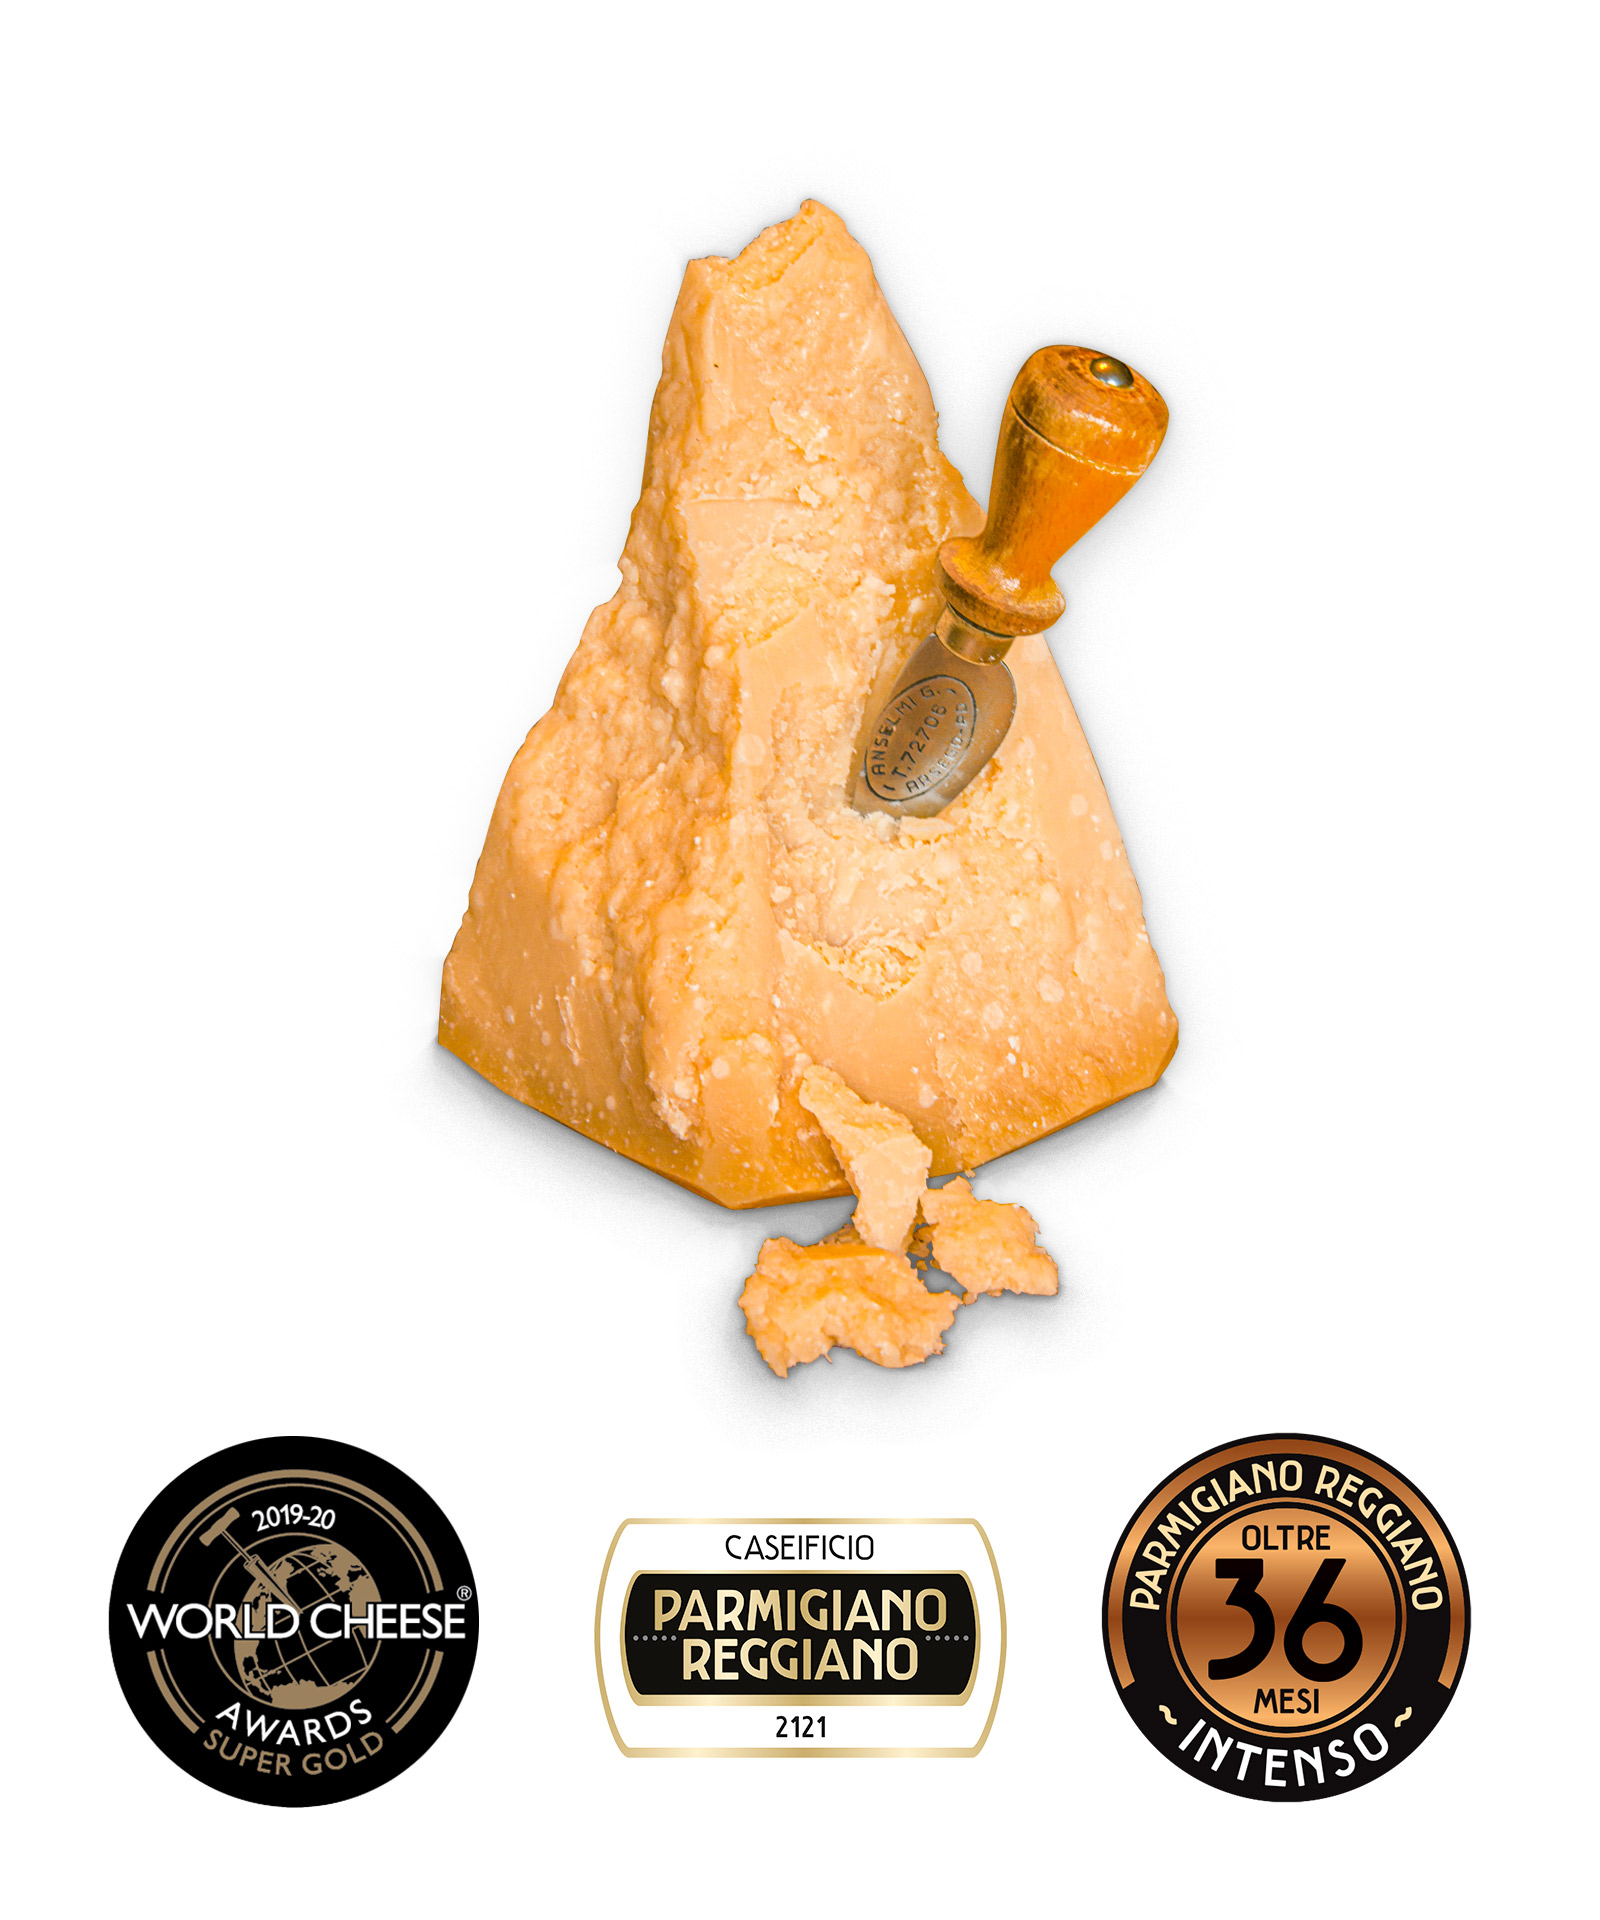 600g 36 Monate Parmigiano Reggiano  DOP Superiore "2121" - Parmesan